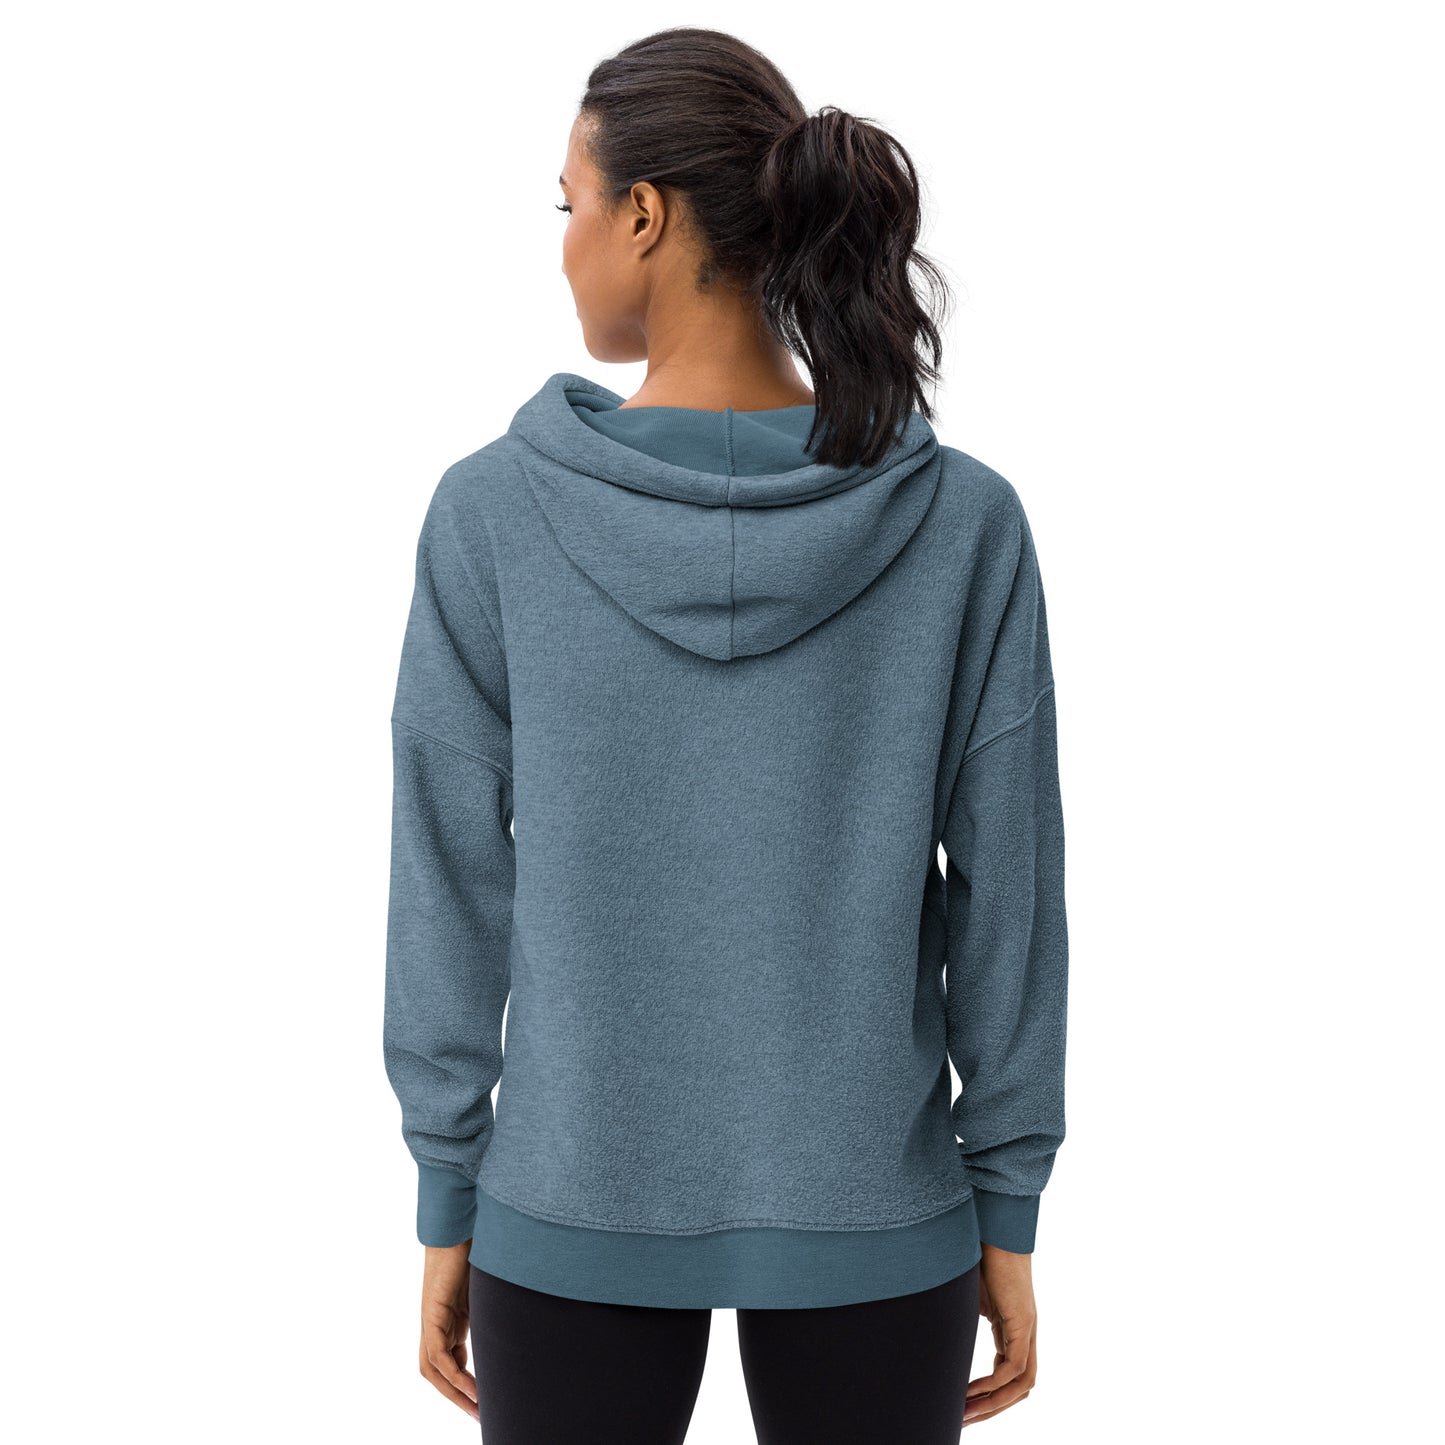 Affirmation Unisex sueded fleece hoodie